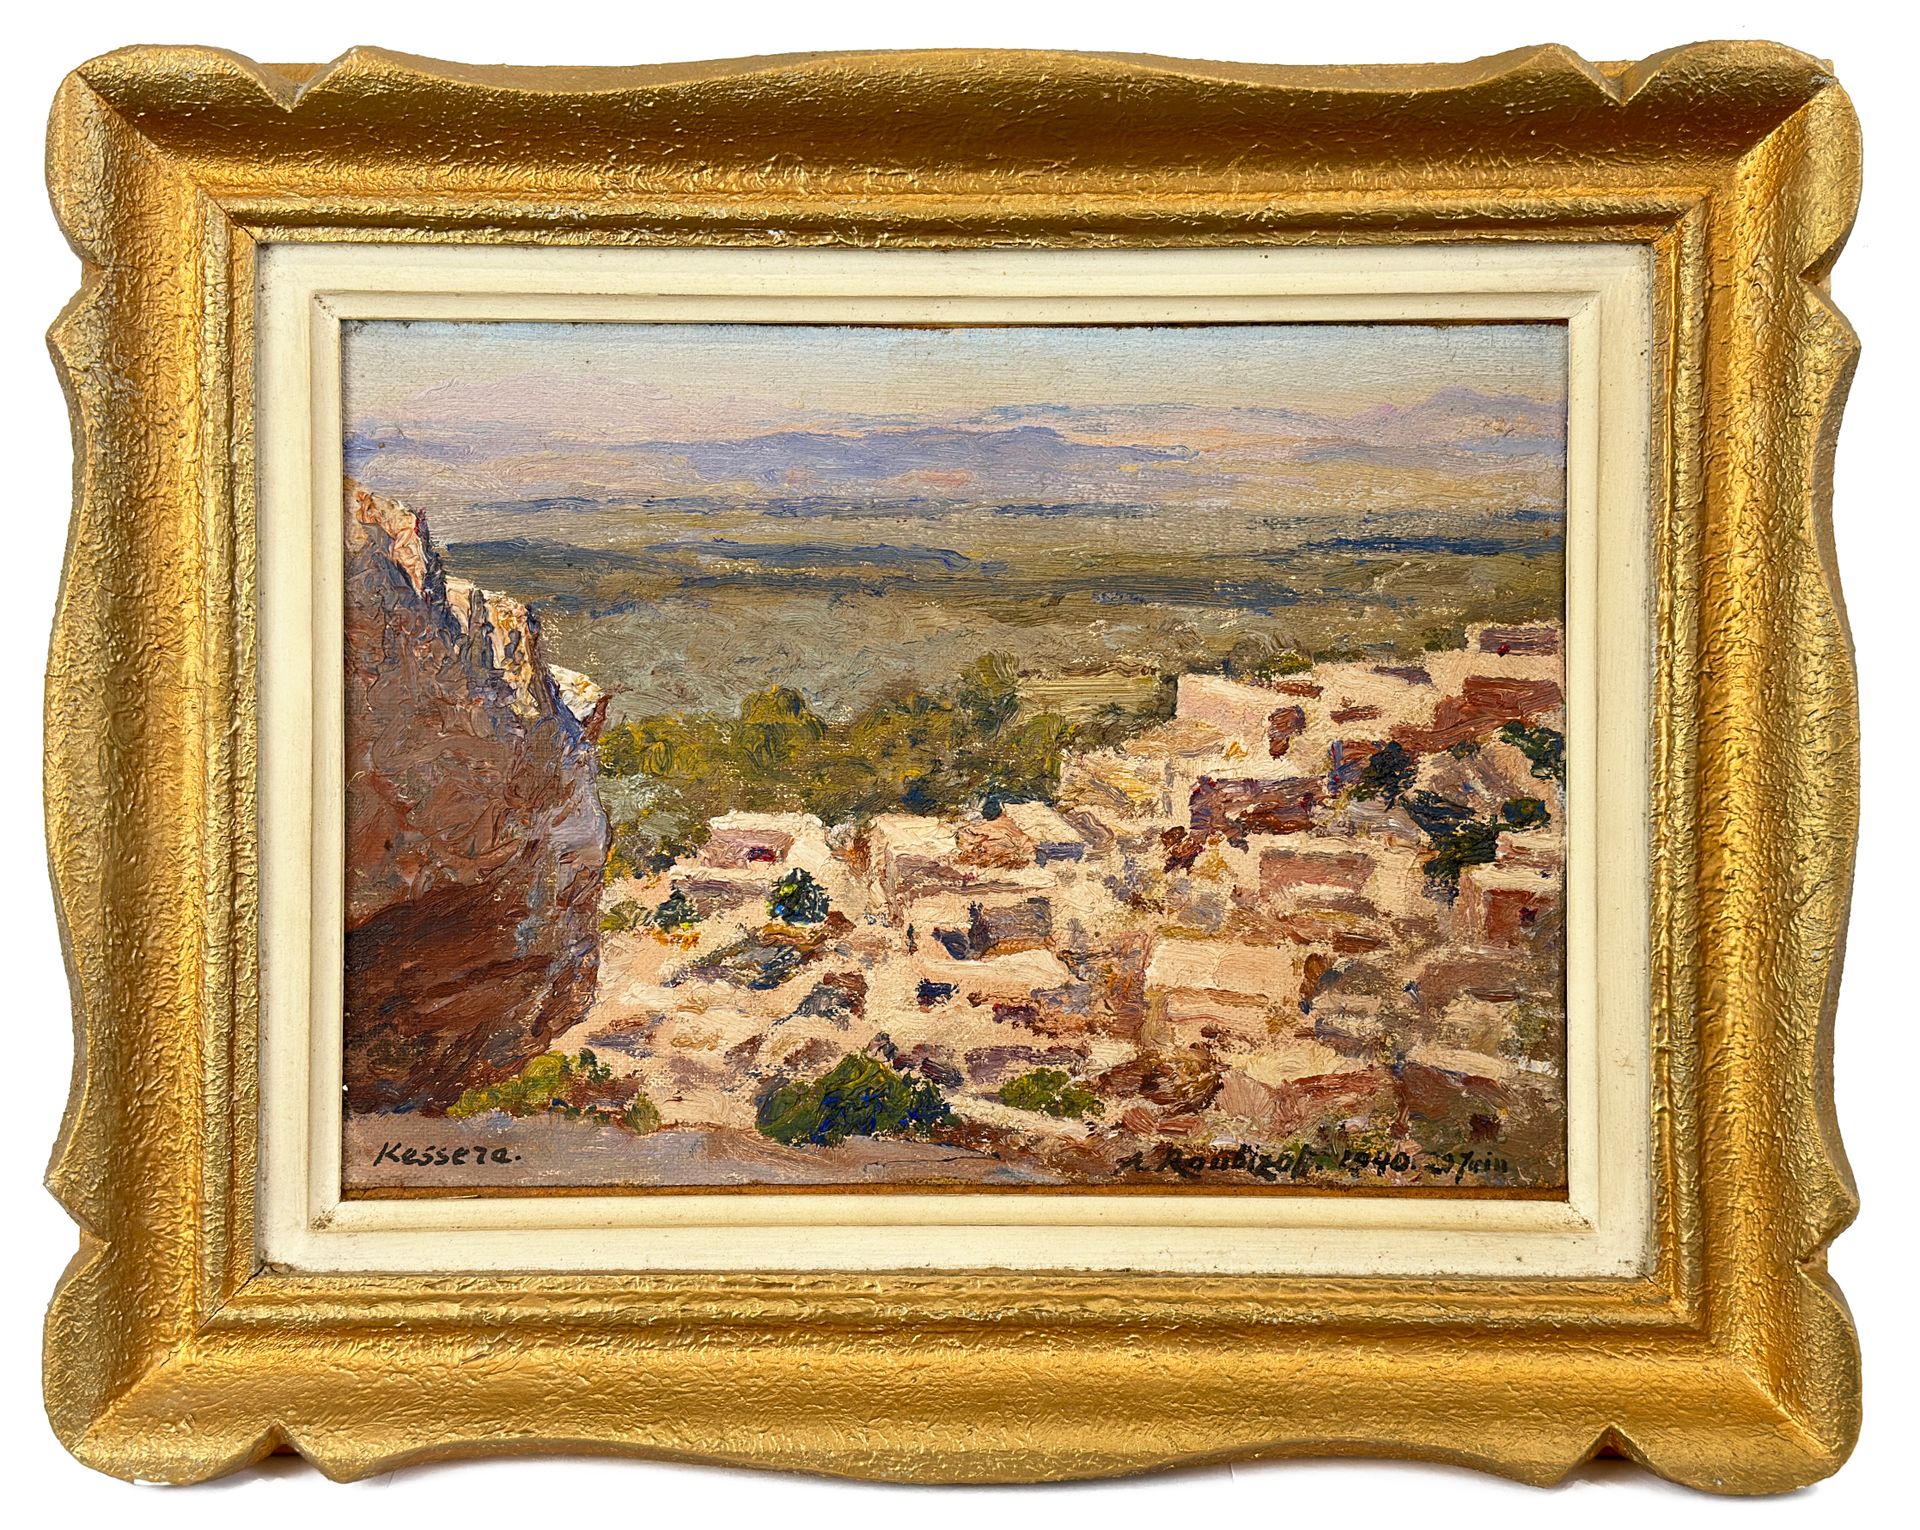 Null Alexandre ROUBTZOFF (Saint Petersburg, 1884 - Tunis, 1949)
View of Kessera &hellip;